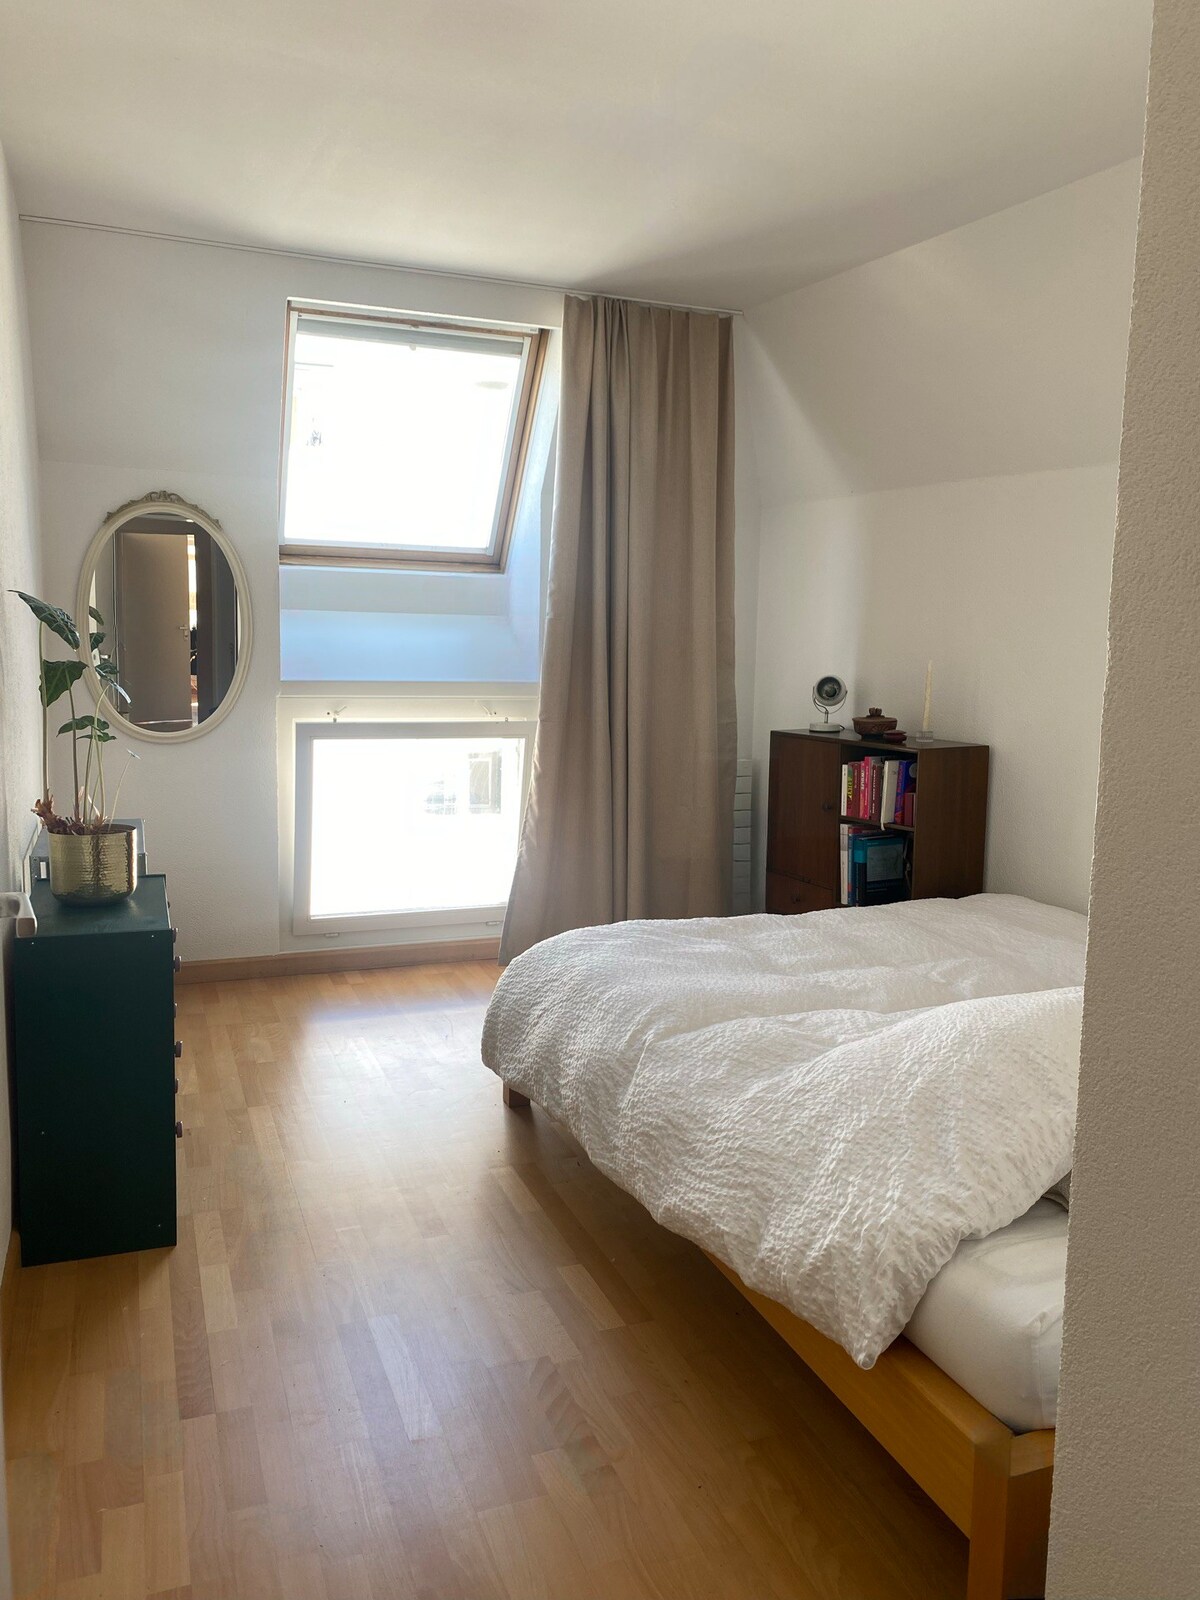 Charming apartment close to Art Basel and Rhein